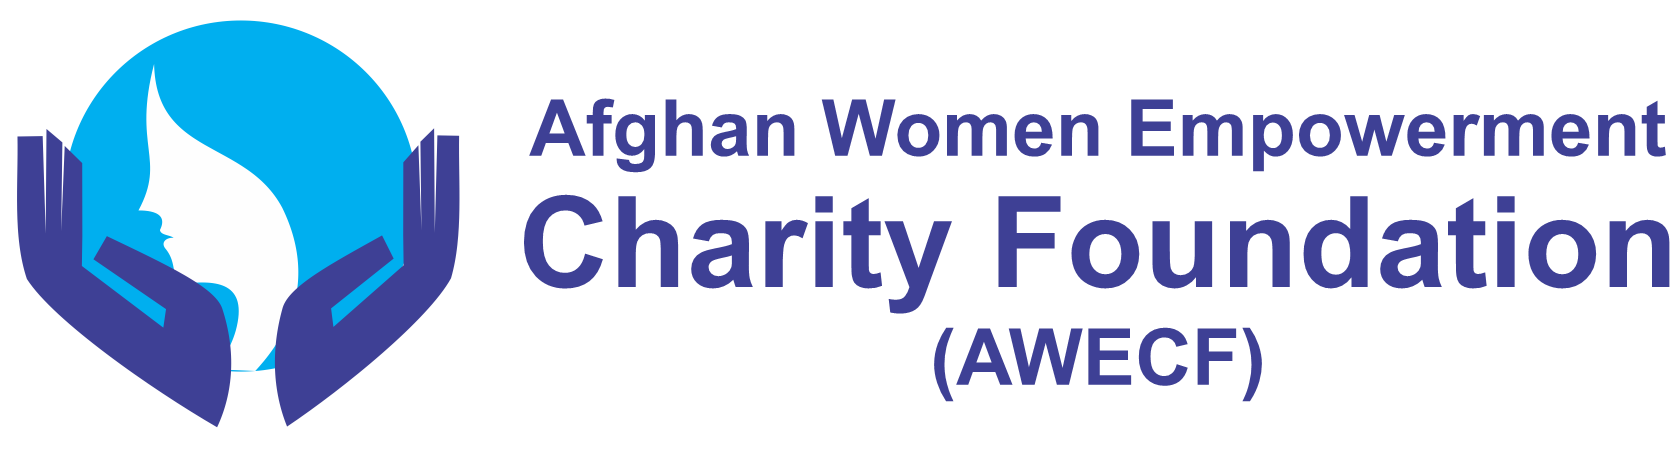 Afghan Women Empowerment Charity Foundation